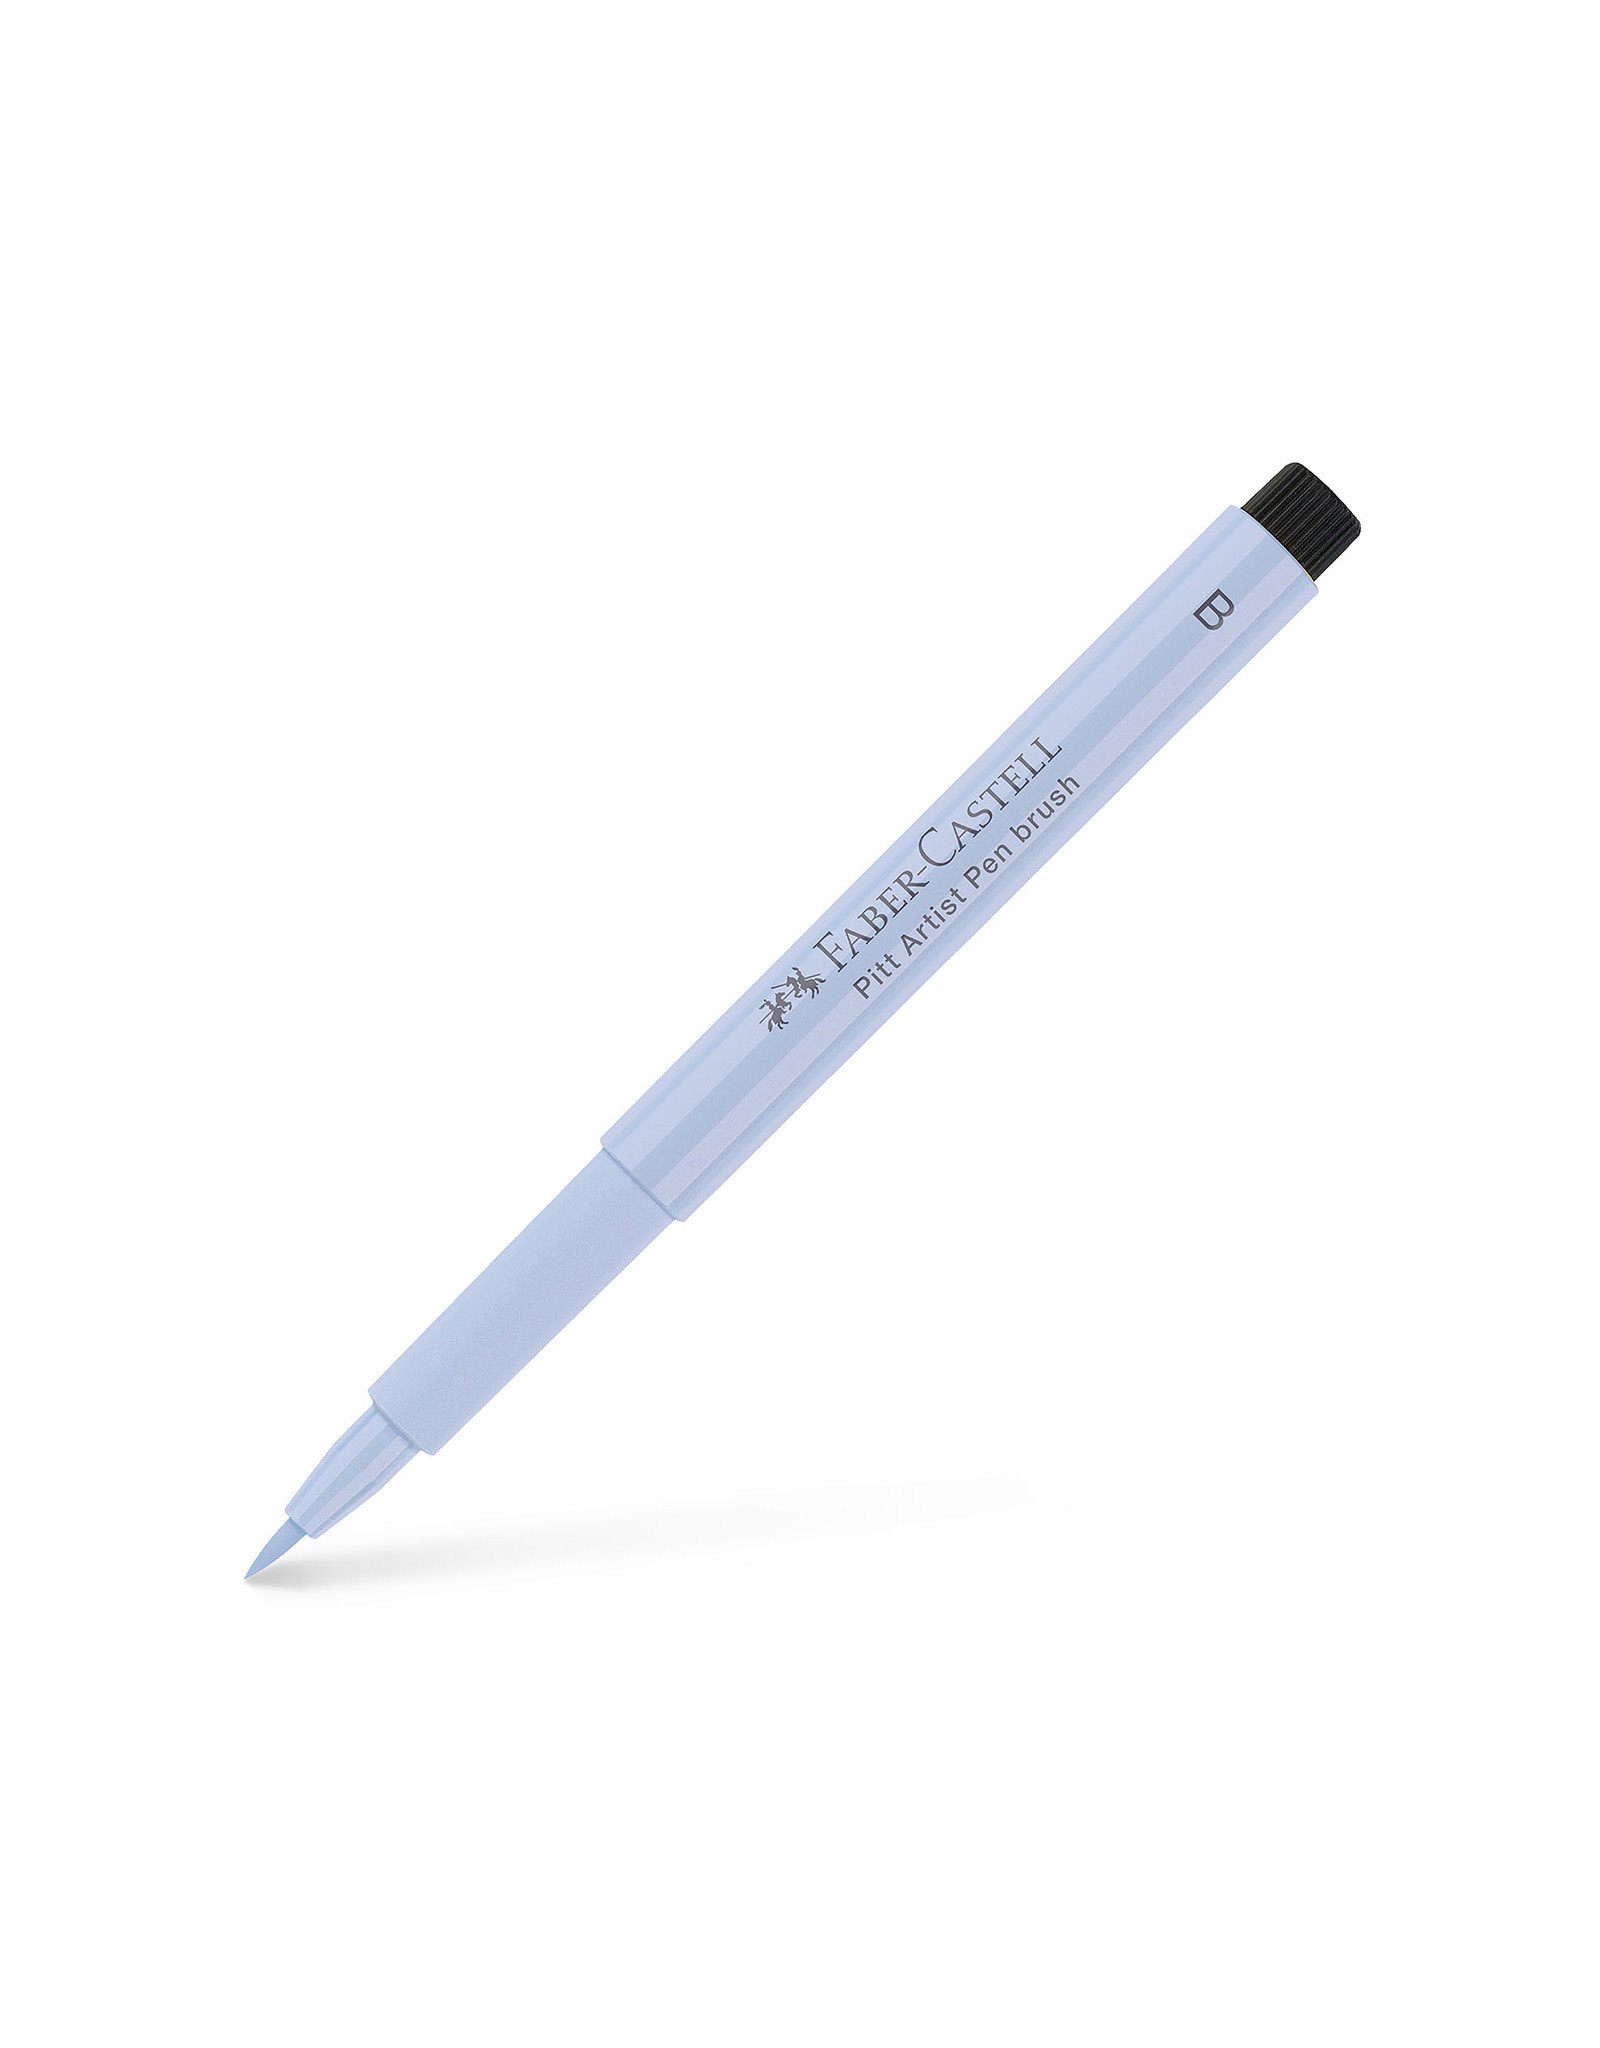 FABER-CASTELL Pitt Artist Pen, Brush, Light Indigo